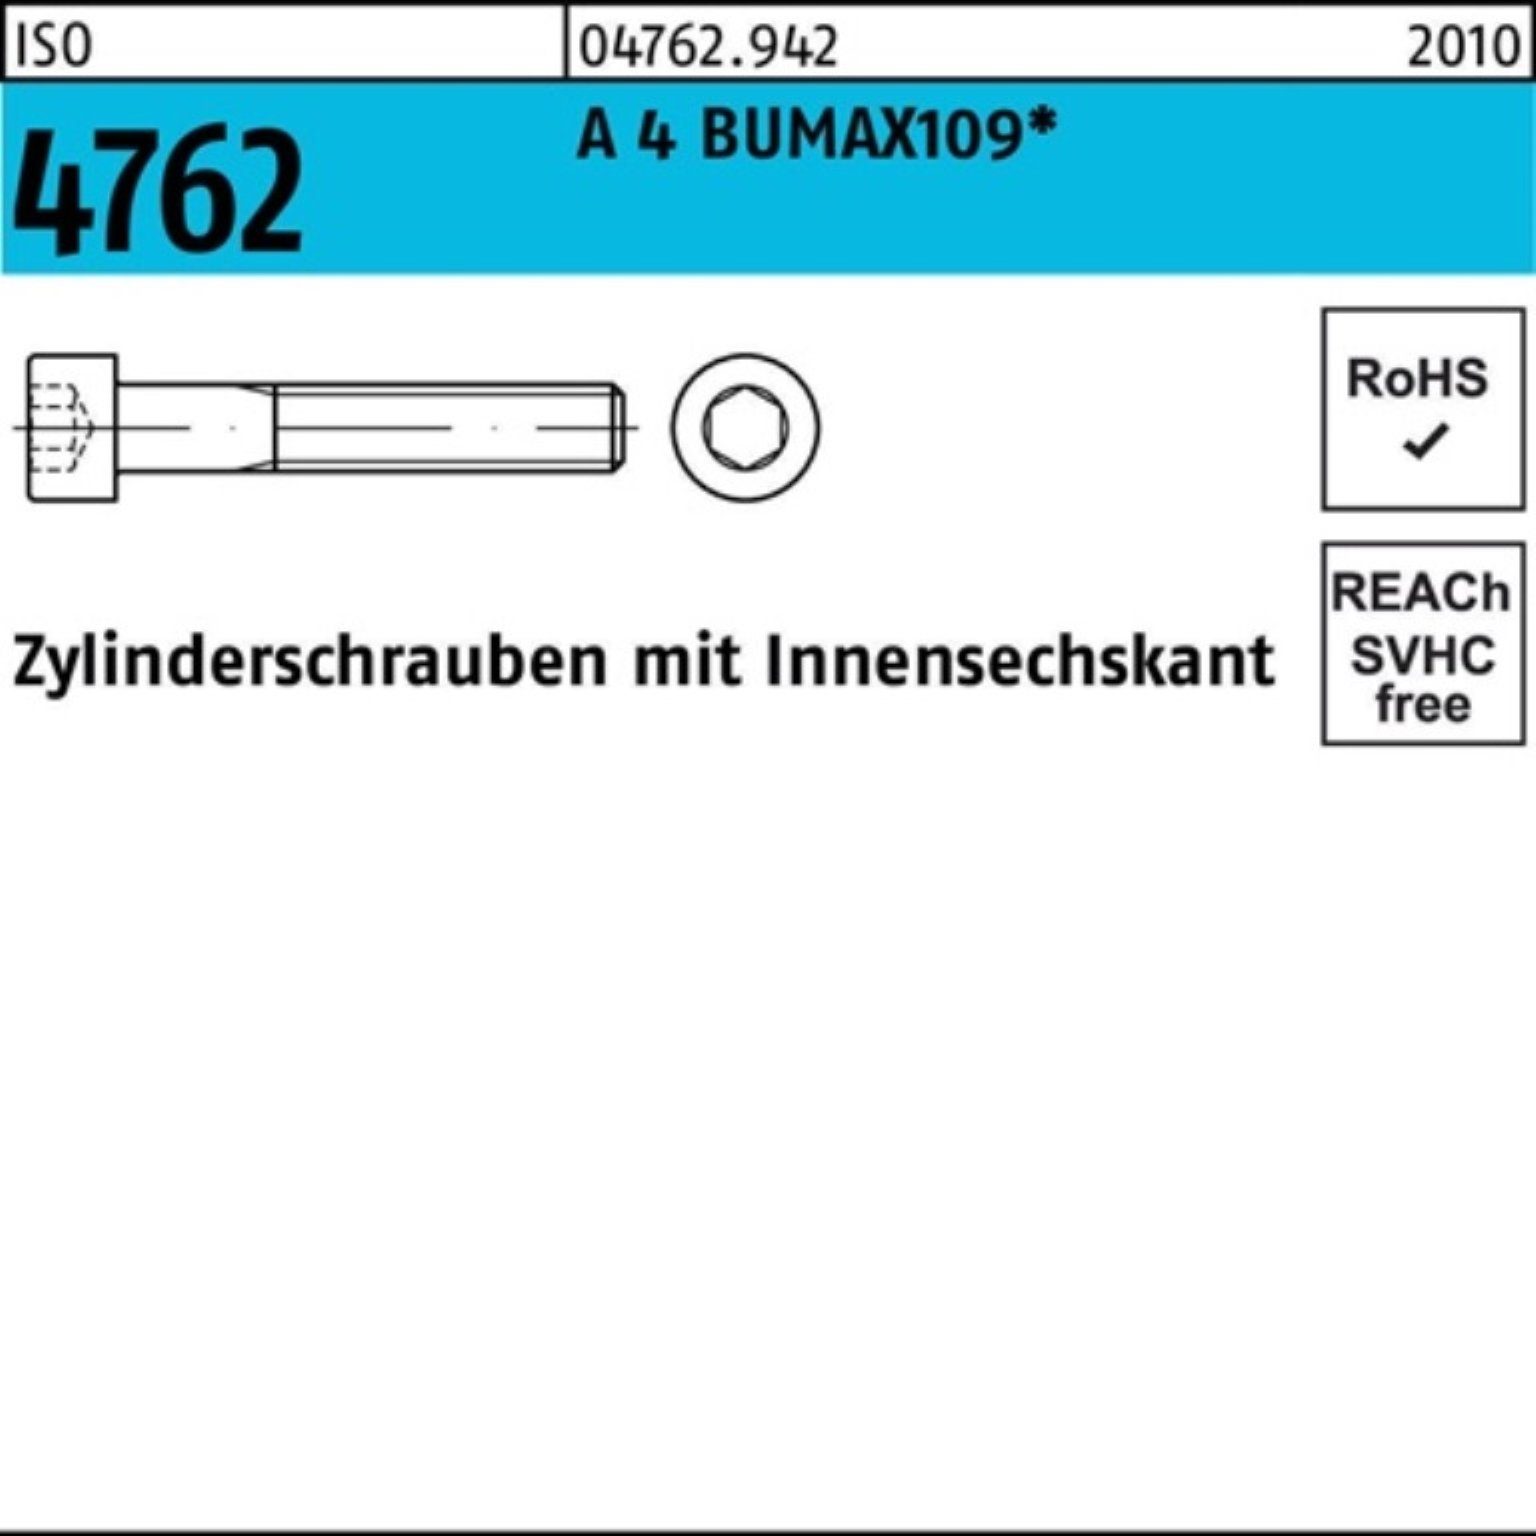 4762 A 100er ISO 4 Zylinderschraube BUMAX109 Zylinderschraube 40 Pack 50 M8x Bufab Innen-6kt